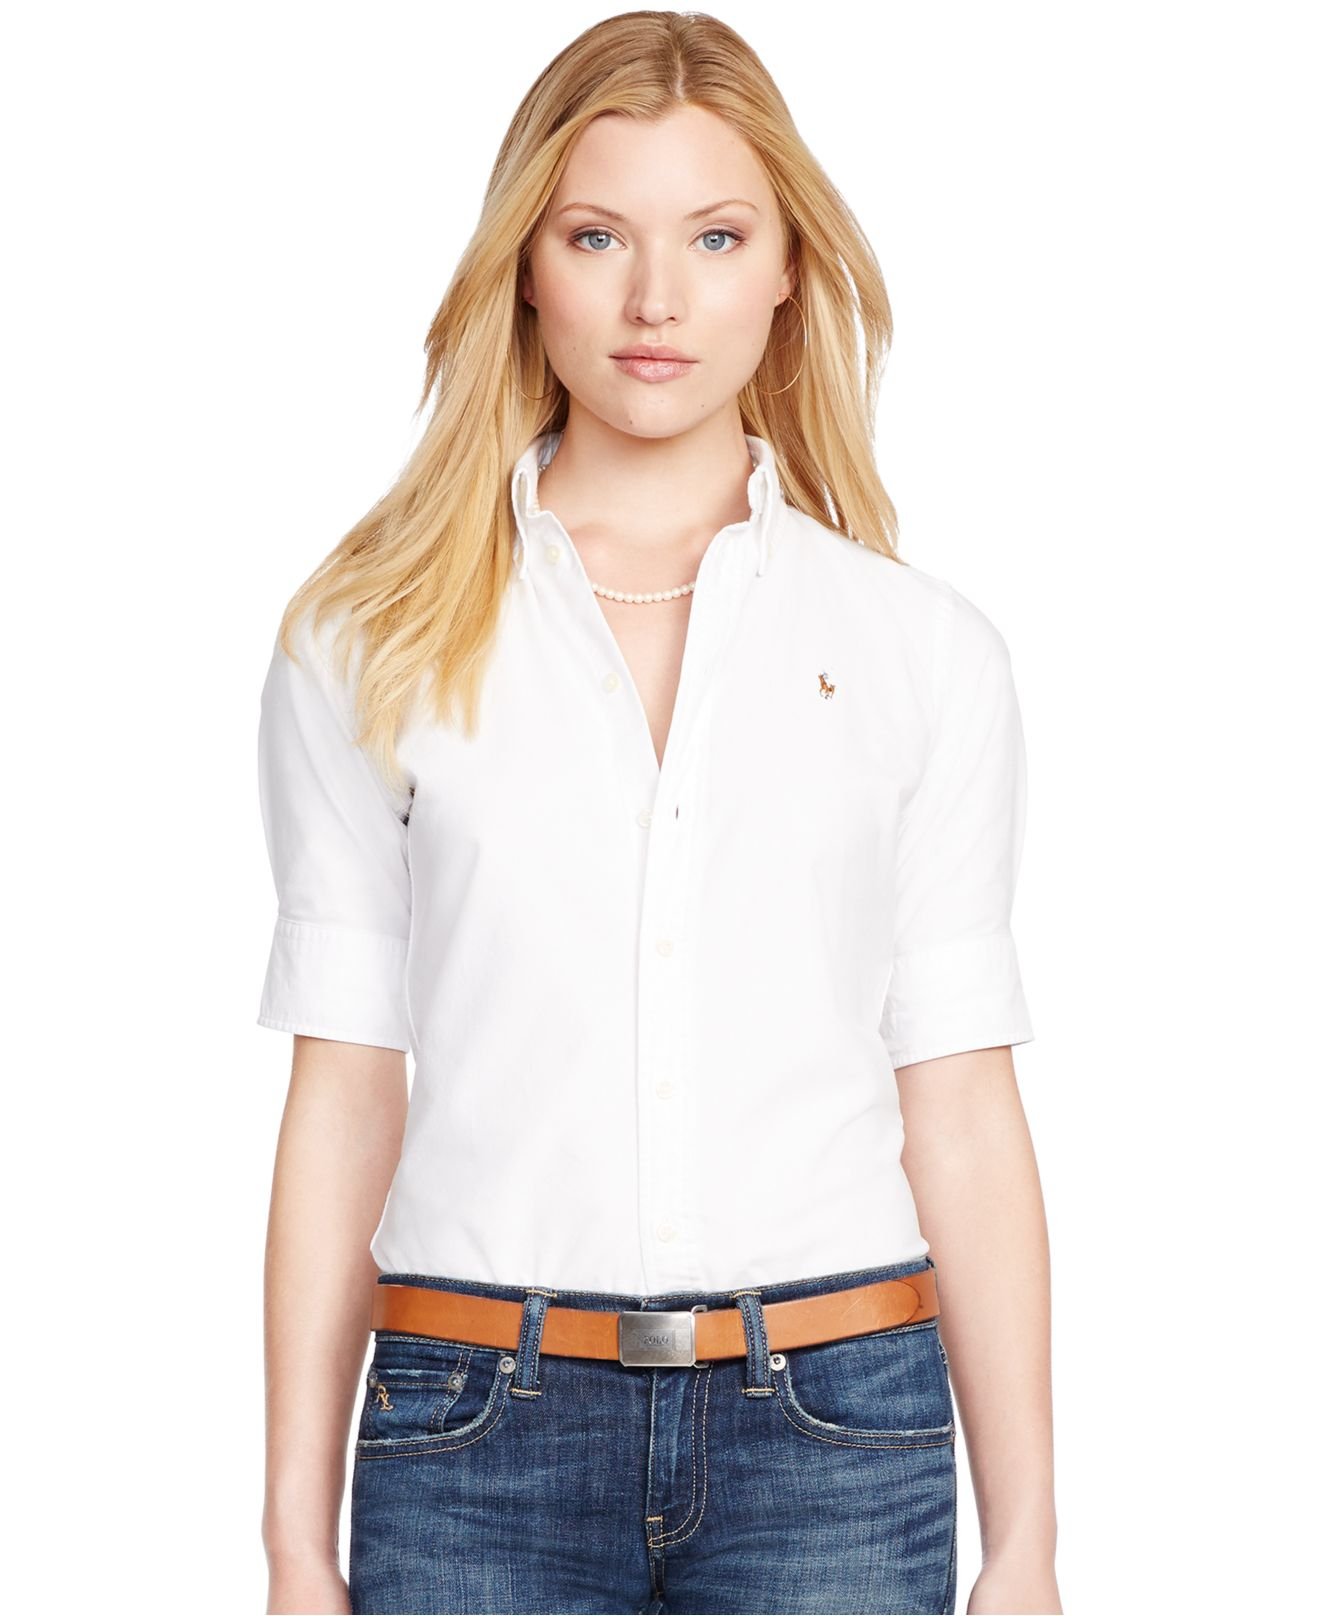 Polo Ralph Lauren Short-sleeve Oxford Shirt in White - Lyst